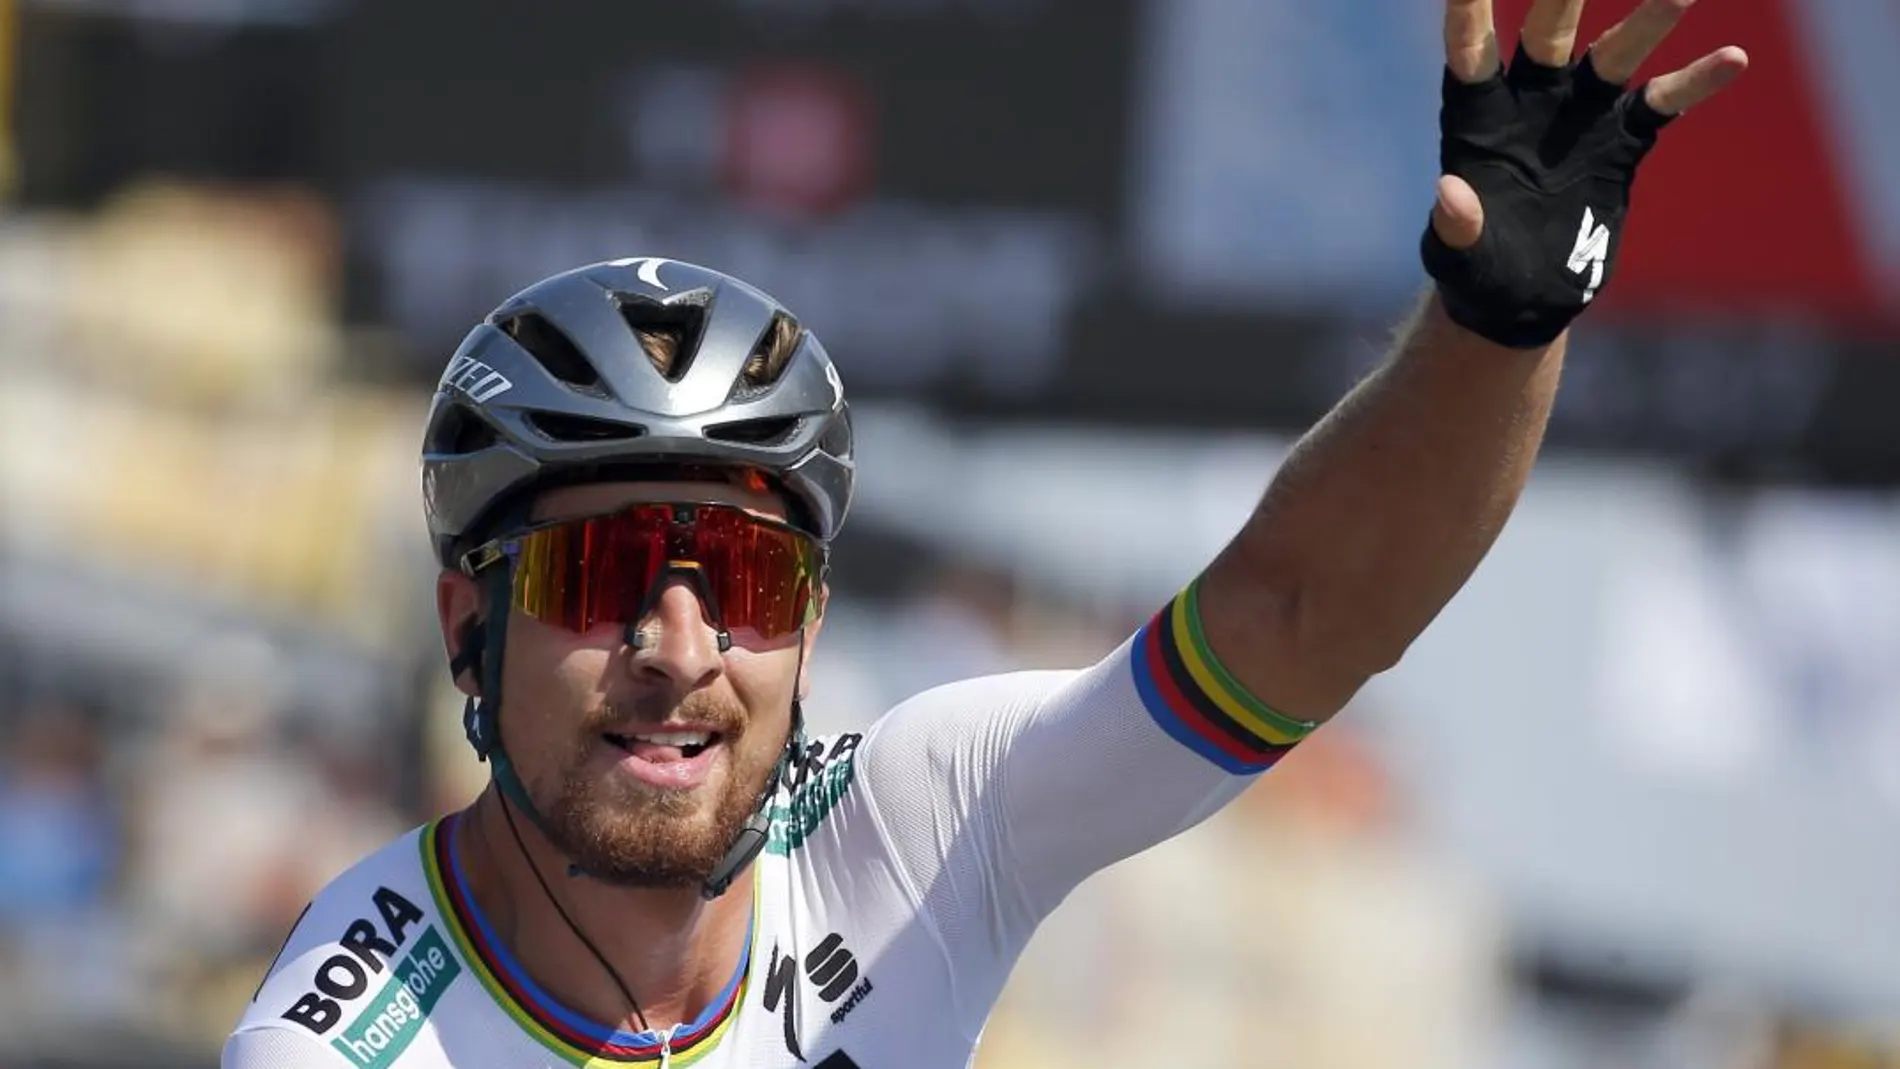 Peter Sagan celebra una victoria de etapa en el Tour